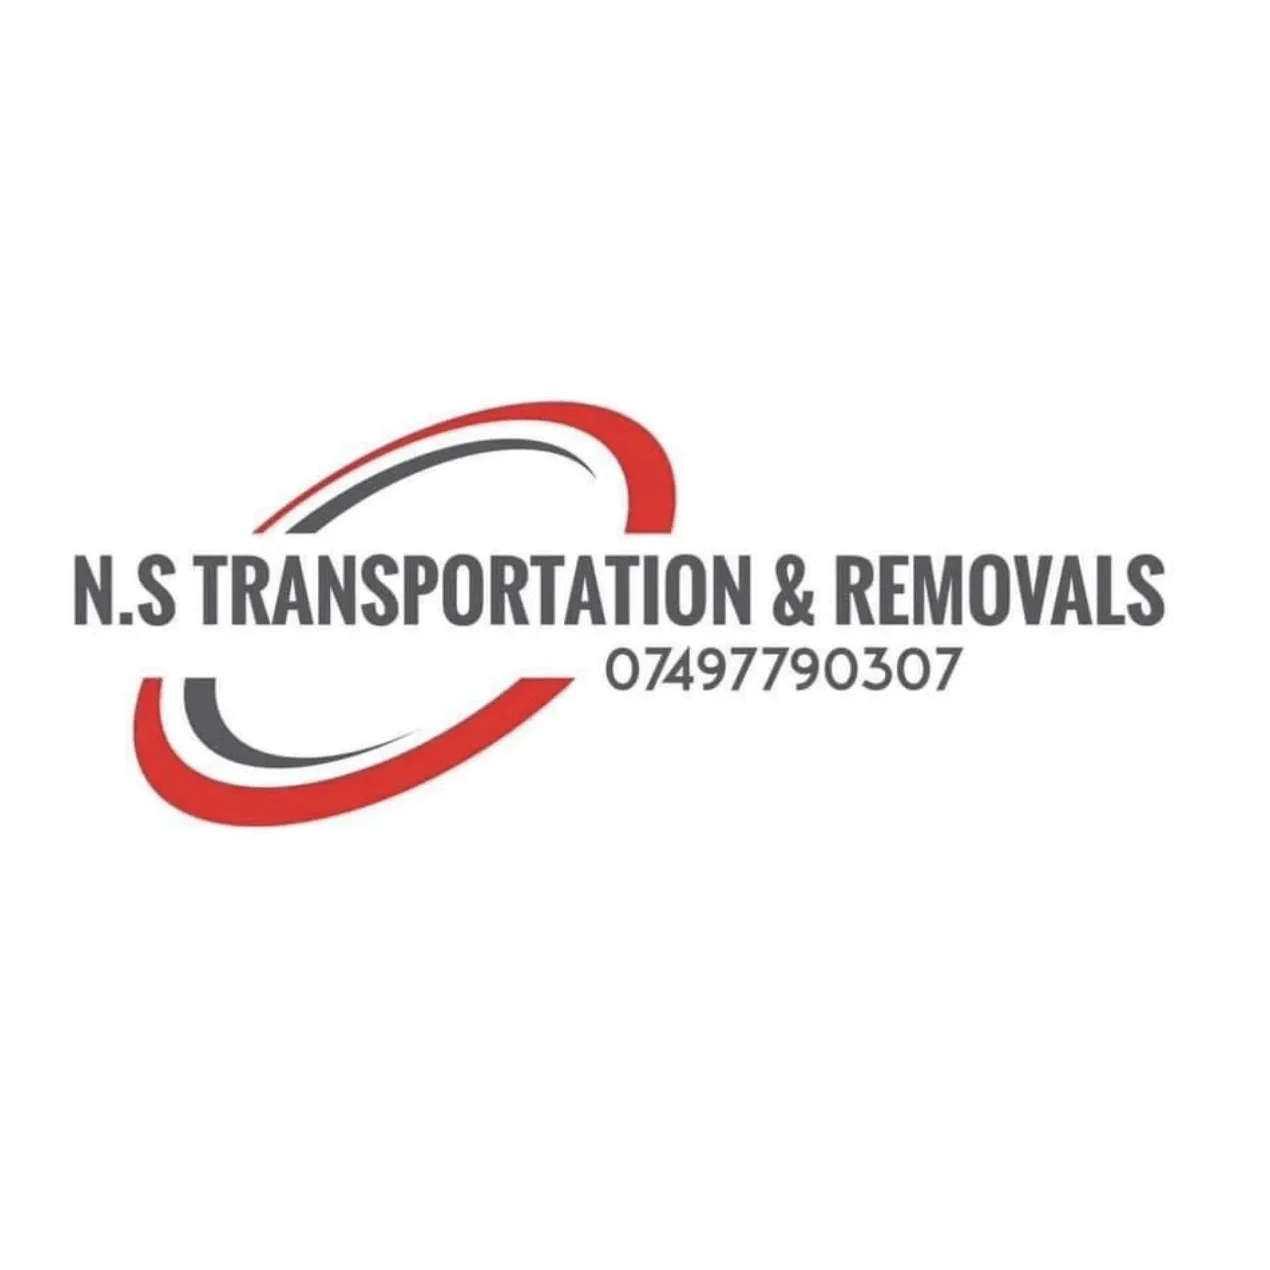 LOGO N.S Transportation & Removals Stone 07497 790307